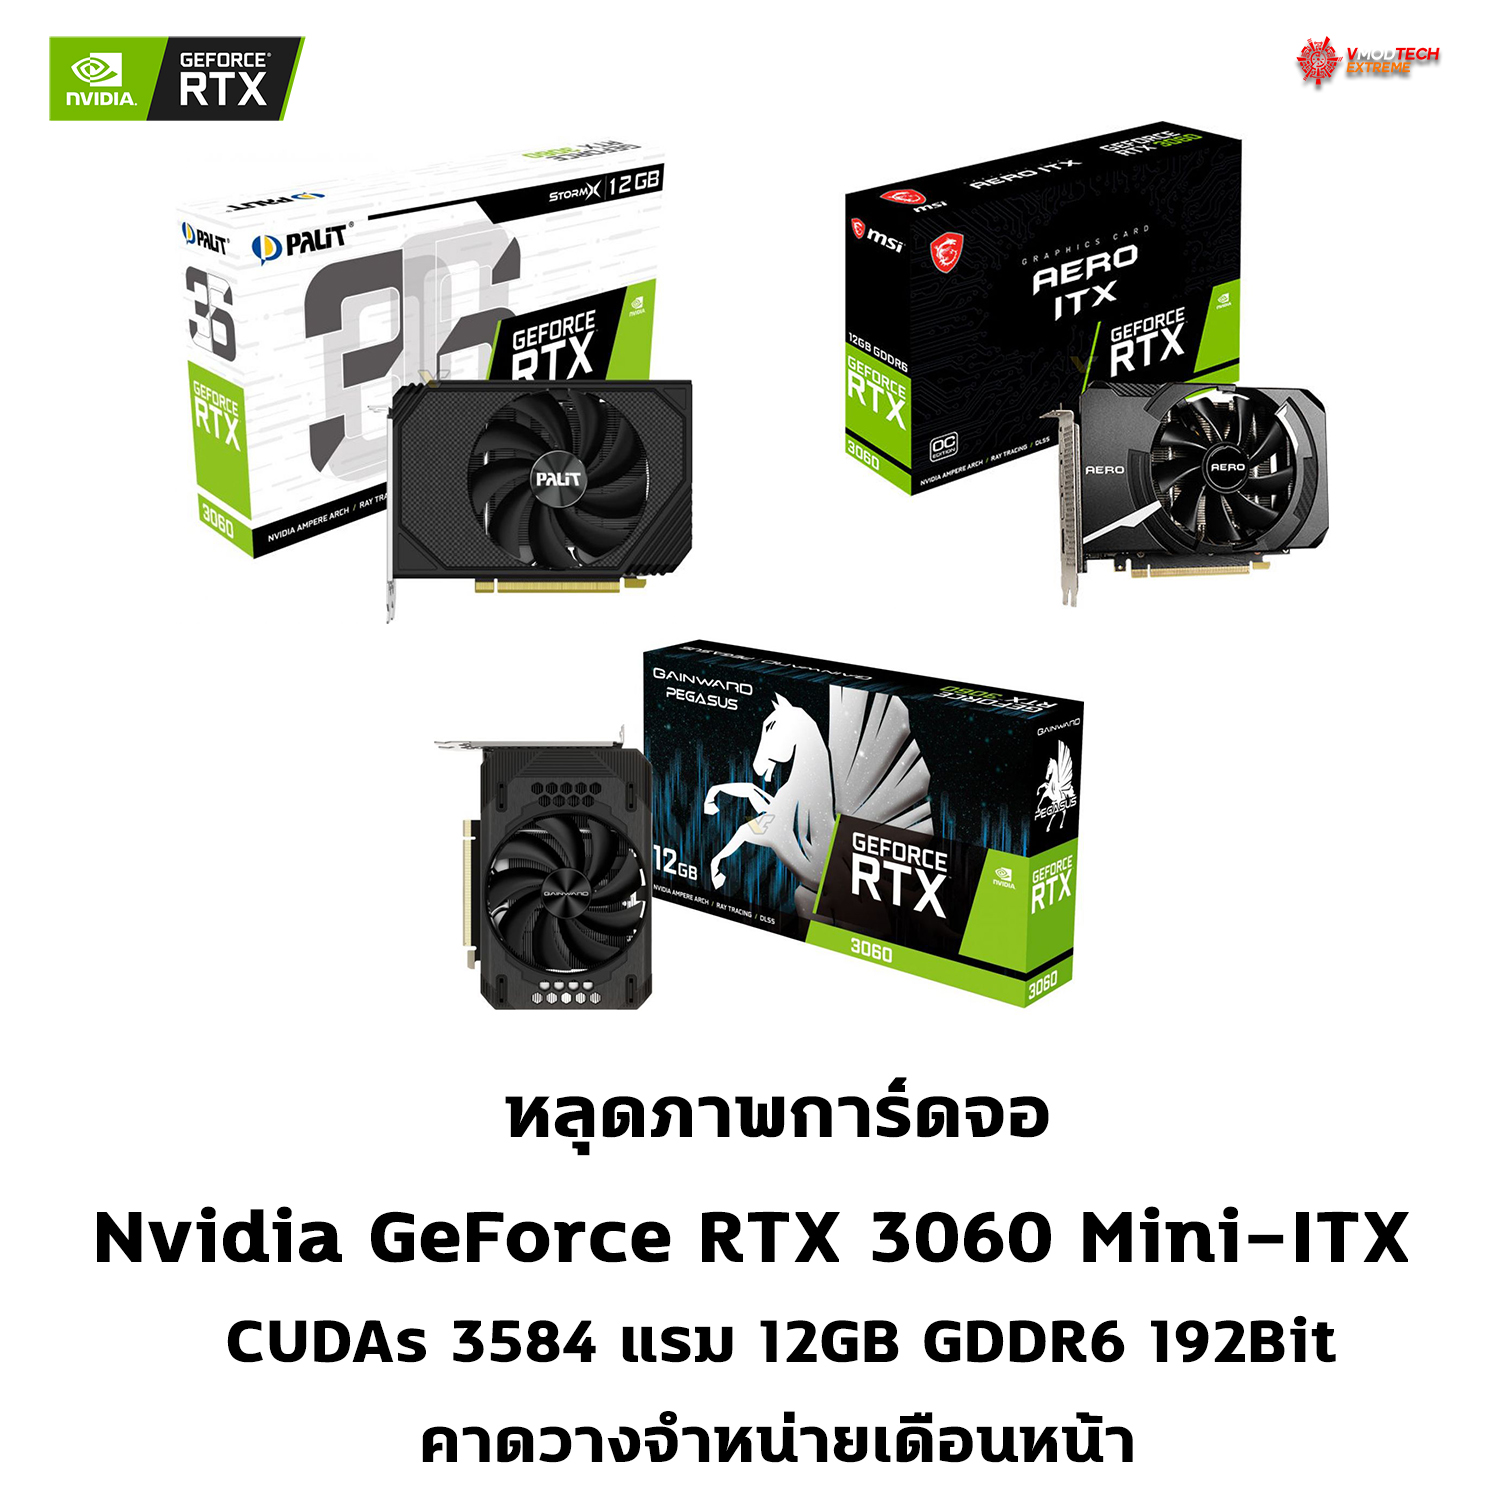 nvidia geforce rtx 3060 mini itx หลุดภาพการ์ดจอ Nvidia GeForce RTX 3060 ไซส์เล็ก Mini ITX คาดวางจำหน่ายเดือนหน้า